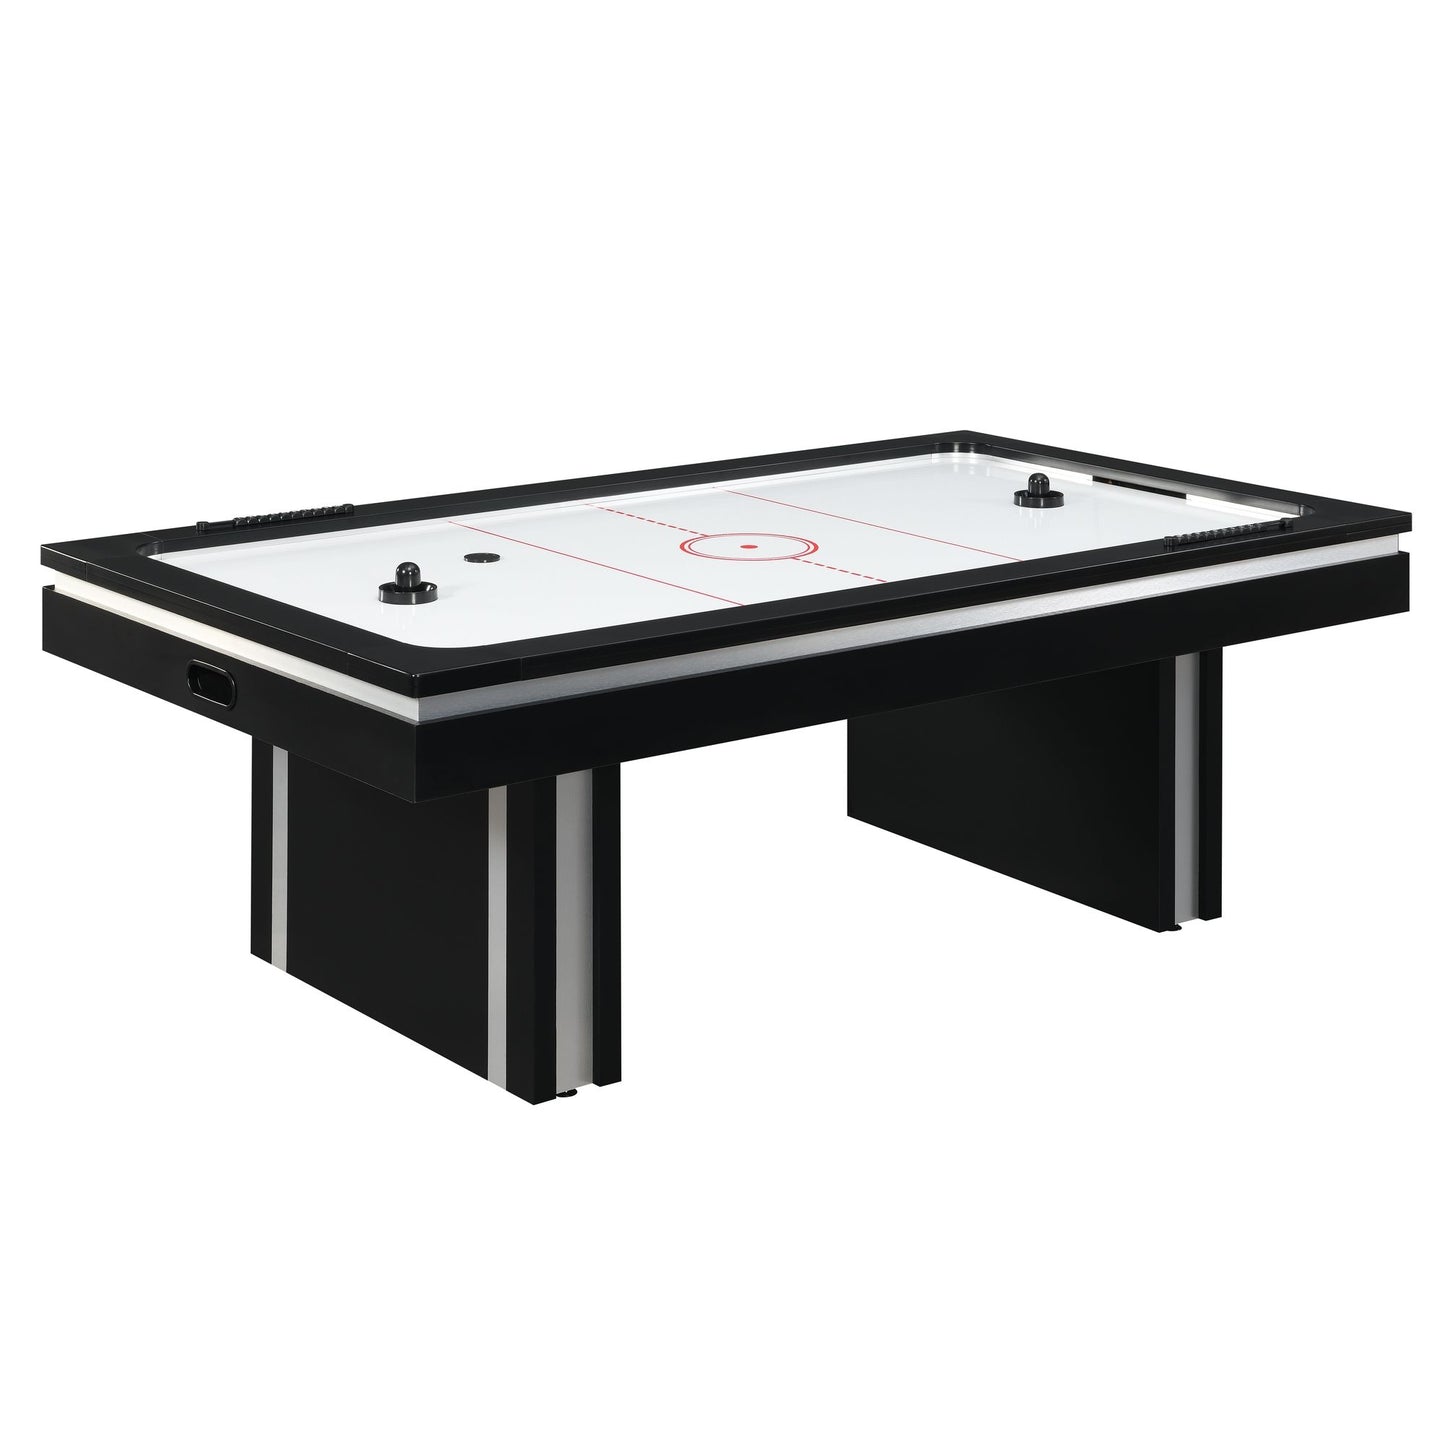 Cloud - Air Hockey Table (Ssg-102506) - Black